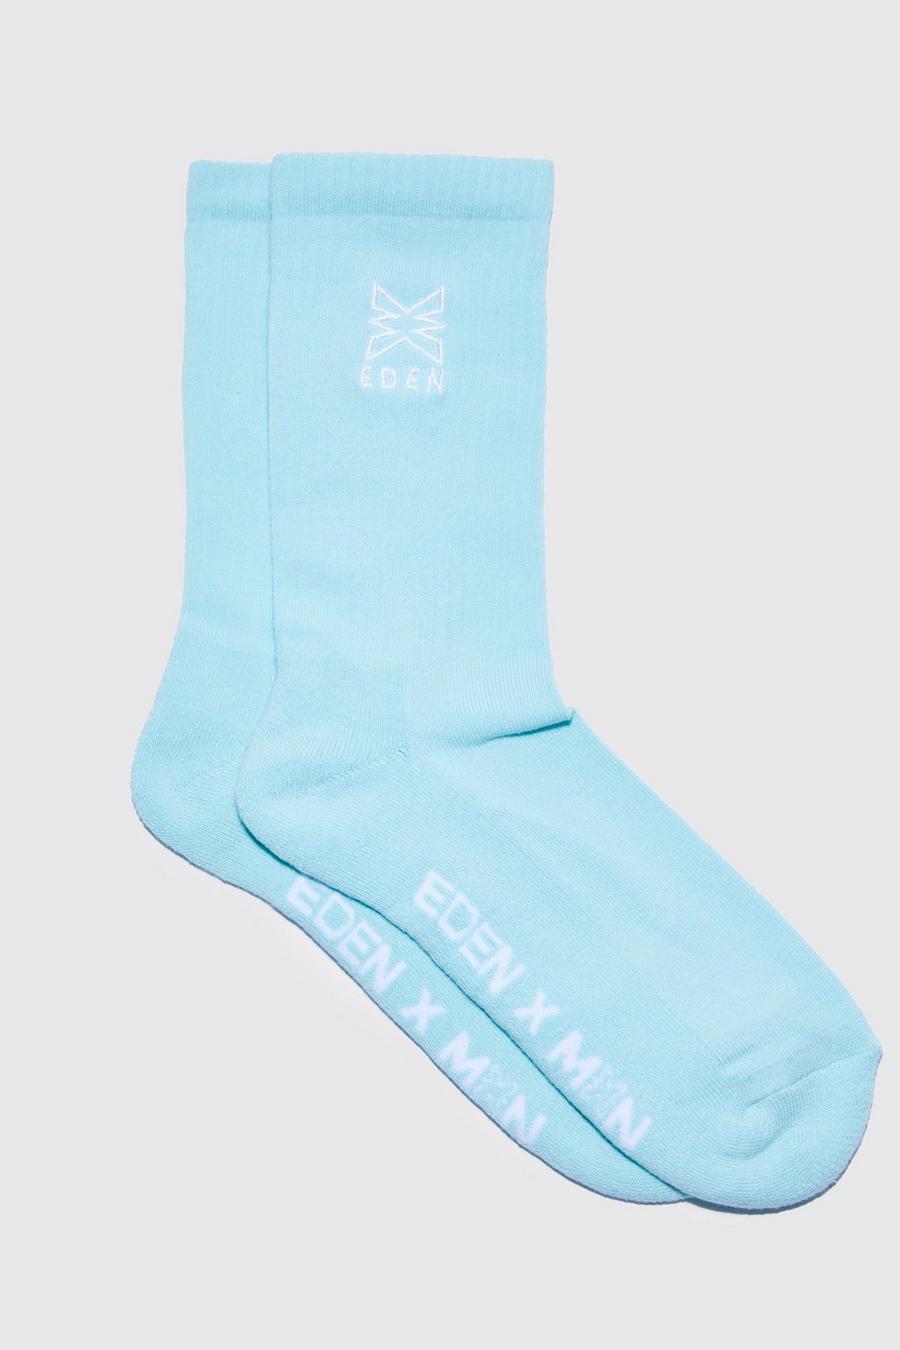 Aqua boohooMAN x EDEN Ibiza Embroidered Socks